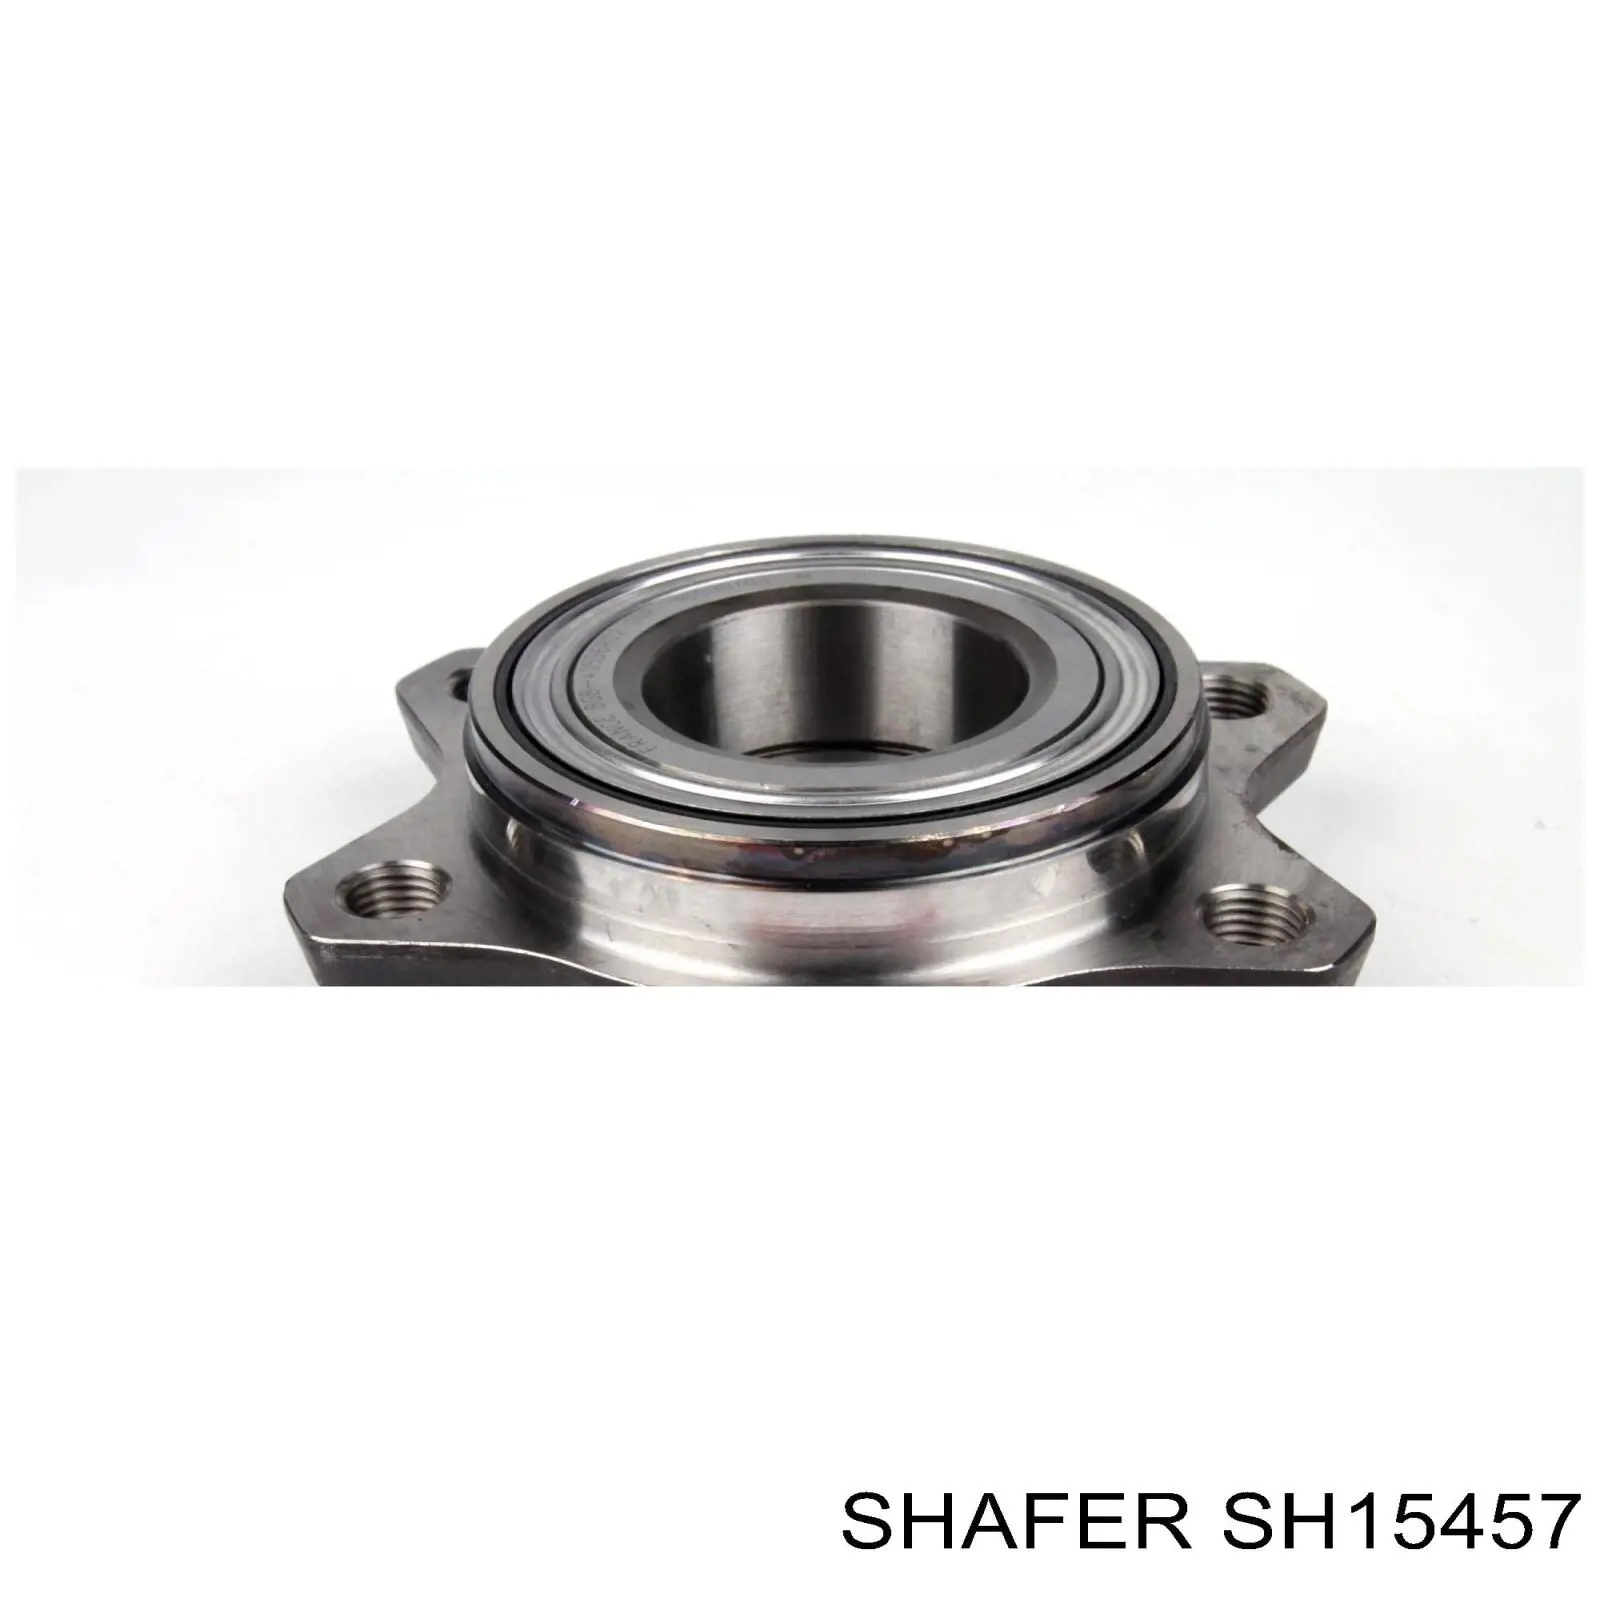 SH15457 Shafer rolamento de cubo dianteiro/traseiro